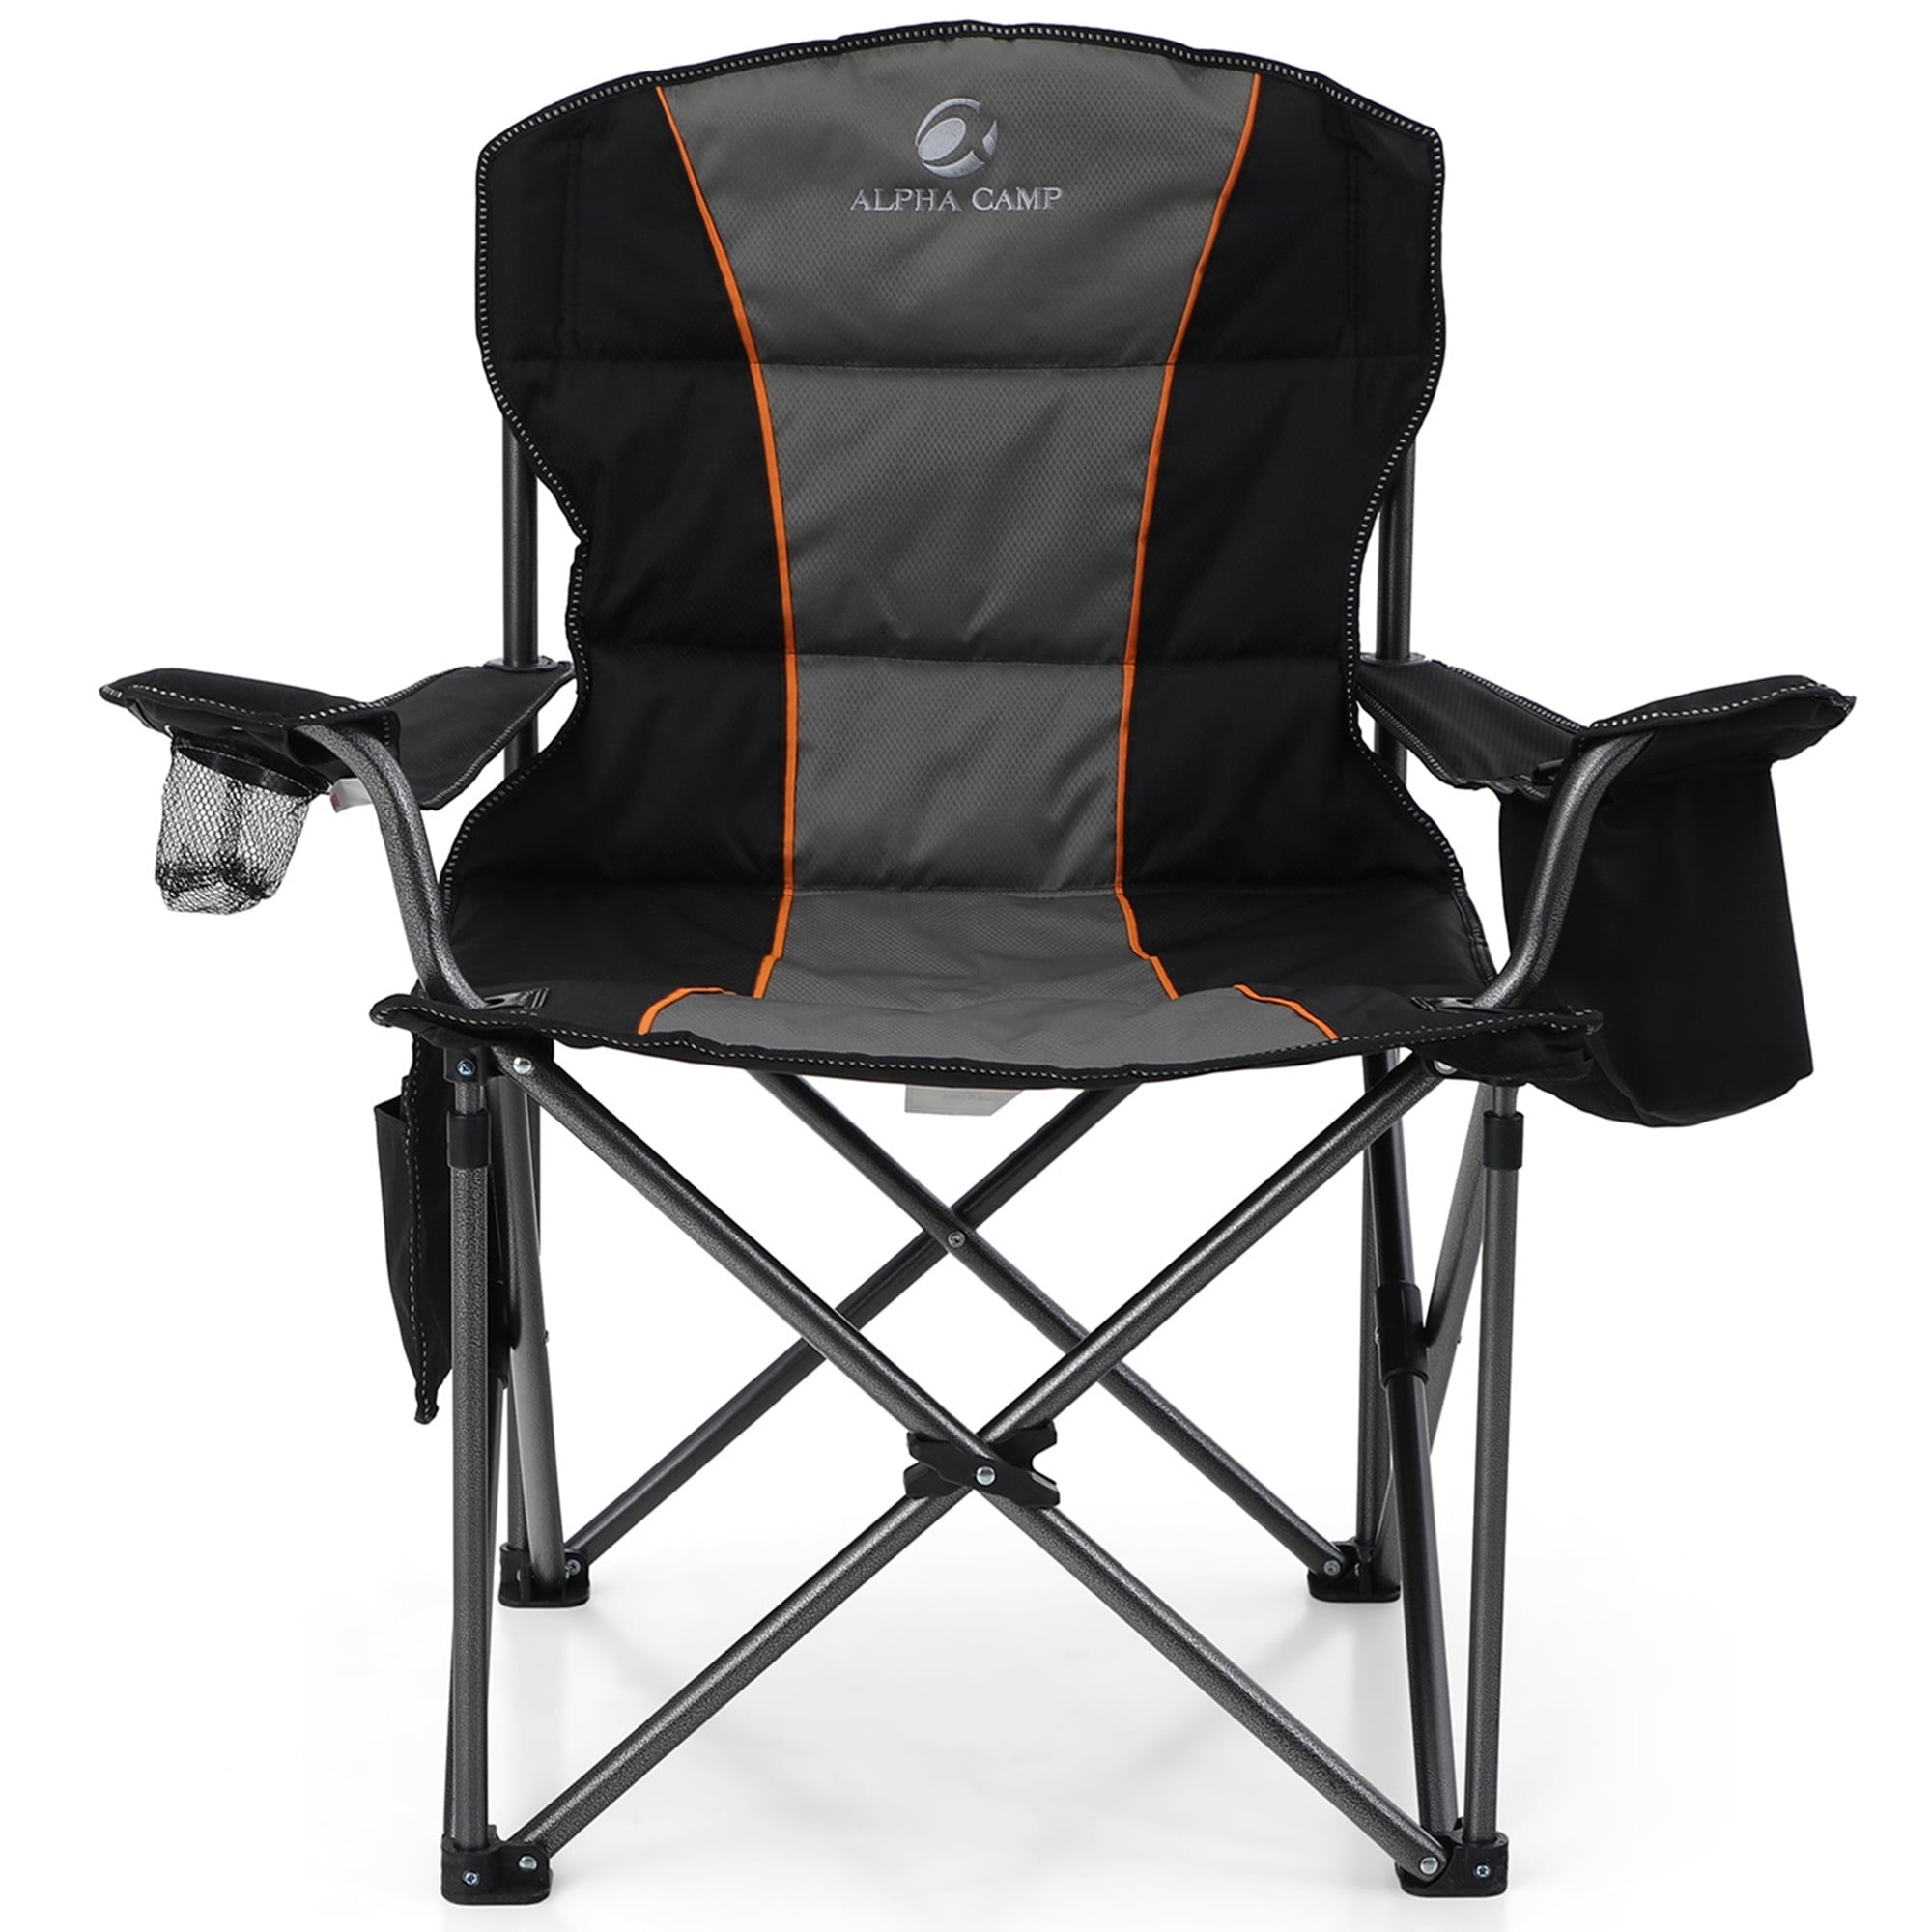 4 X Portable Folding Chair for Extérieur Camping Fishing Picnic beach seat Black 